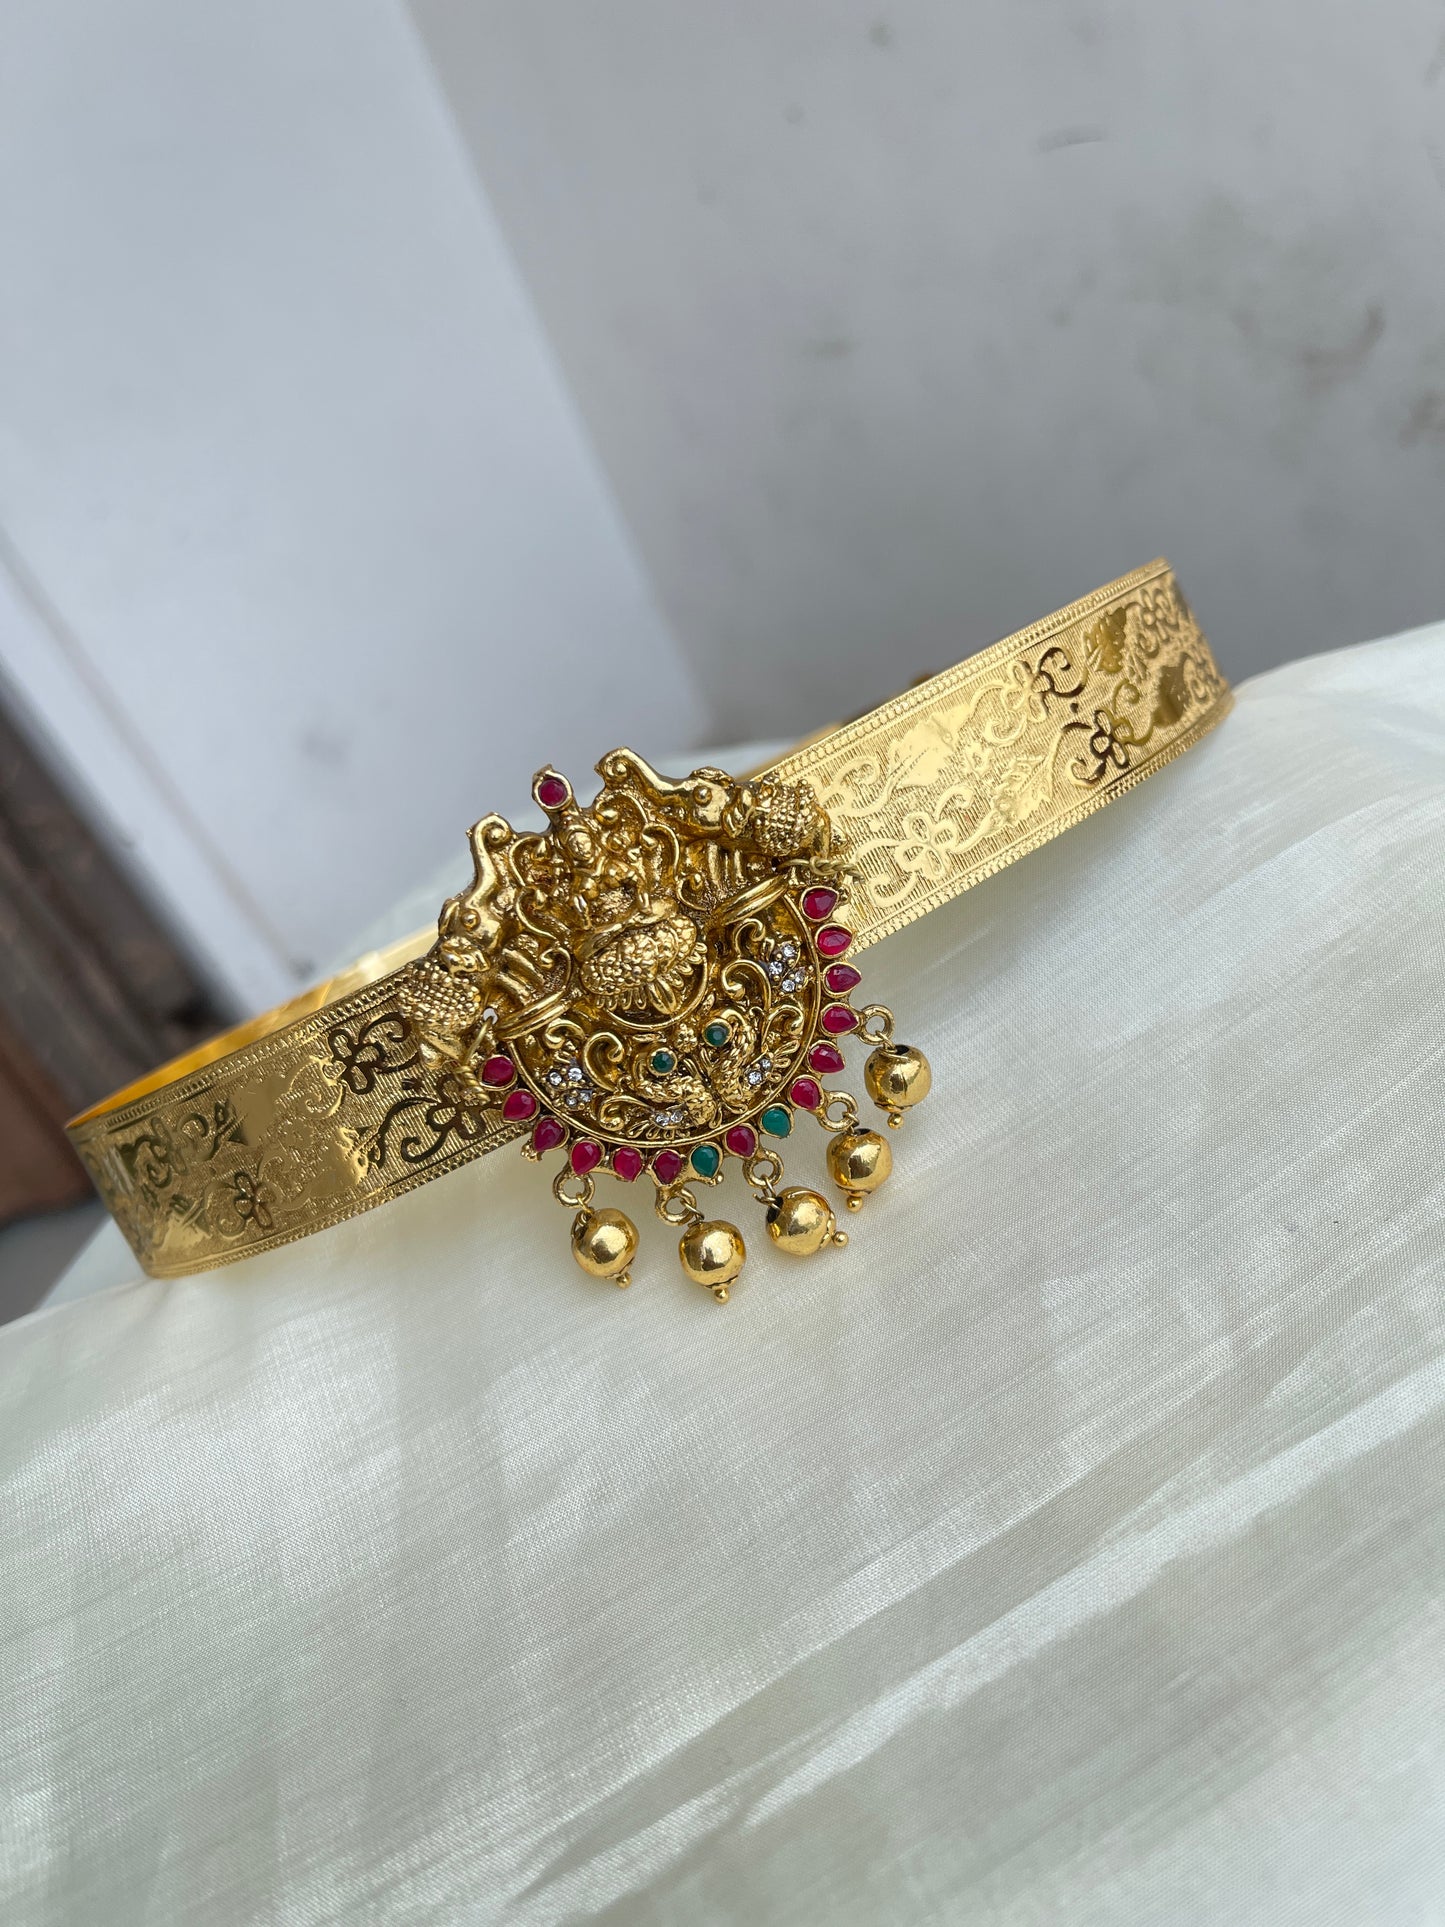 Lakshmi Devi pendant with textured design kids hipbelt